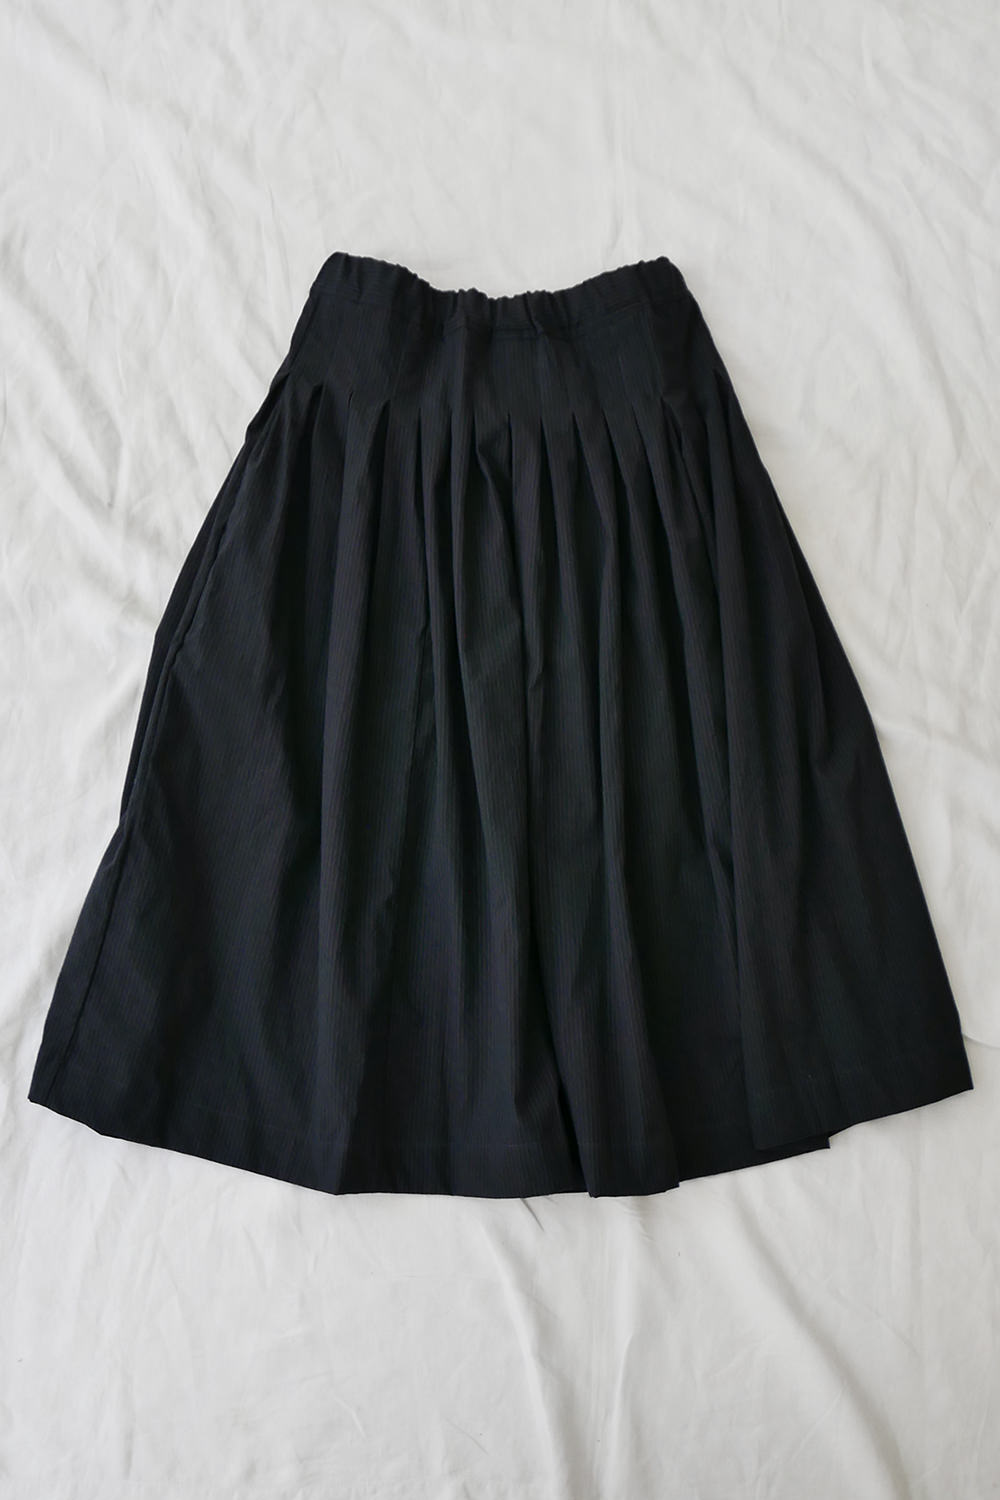 Bergfabel, ベルグ・ファベル, Made in Italy, Skirt, スカート